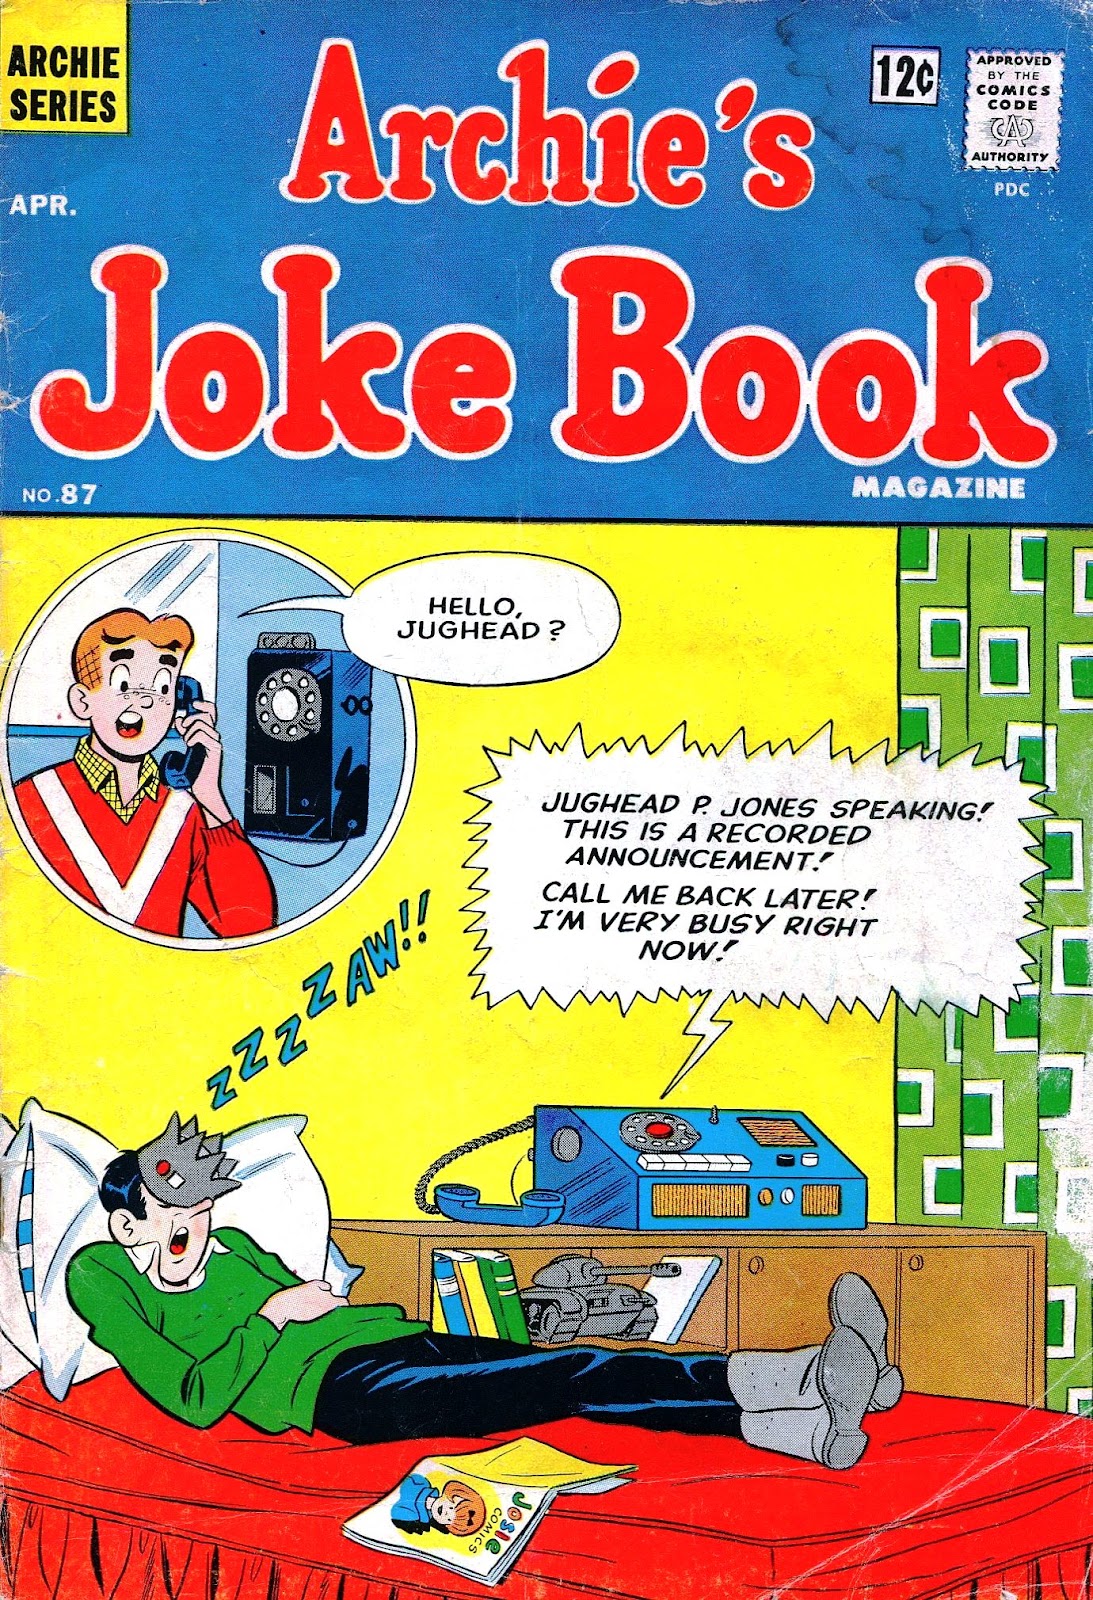 Archie's Joke Book Magazine issue 87 - Page 1